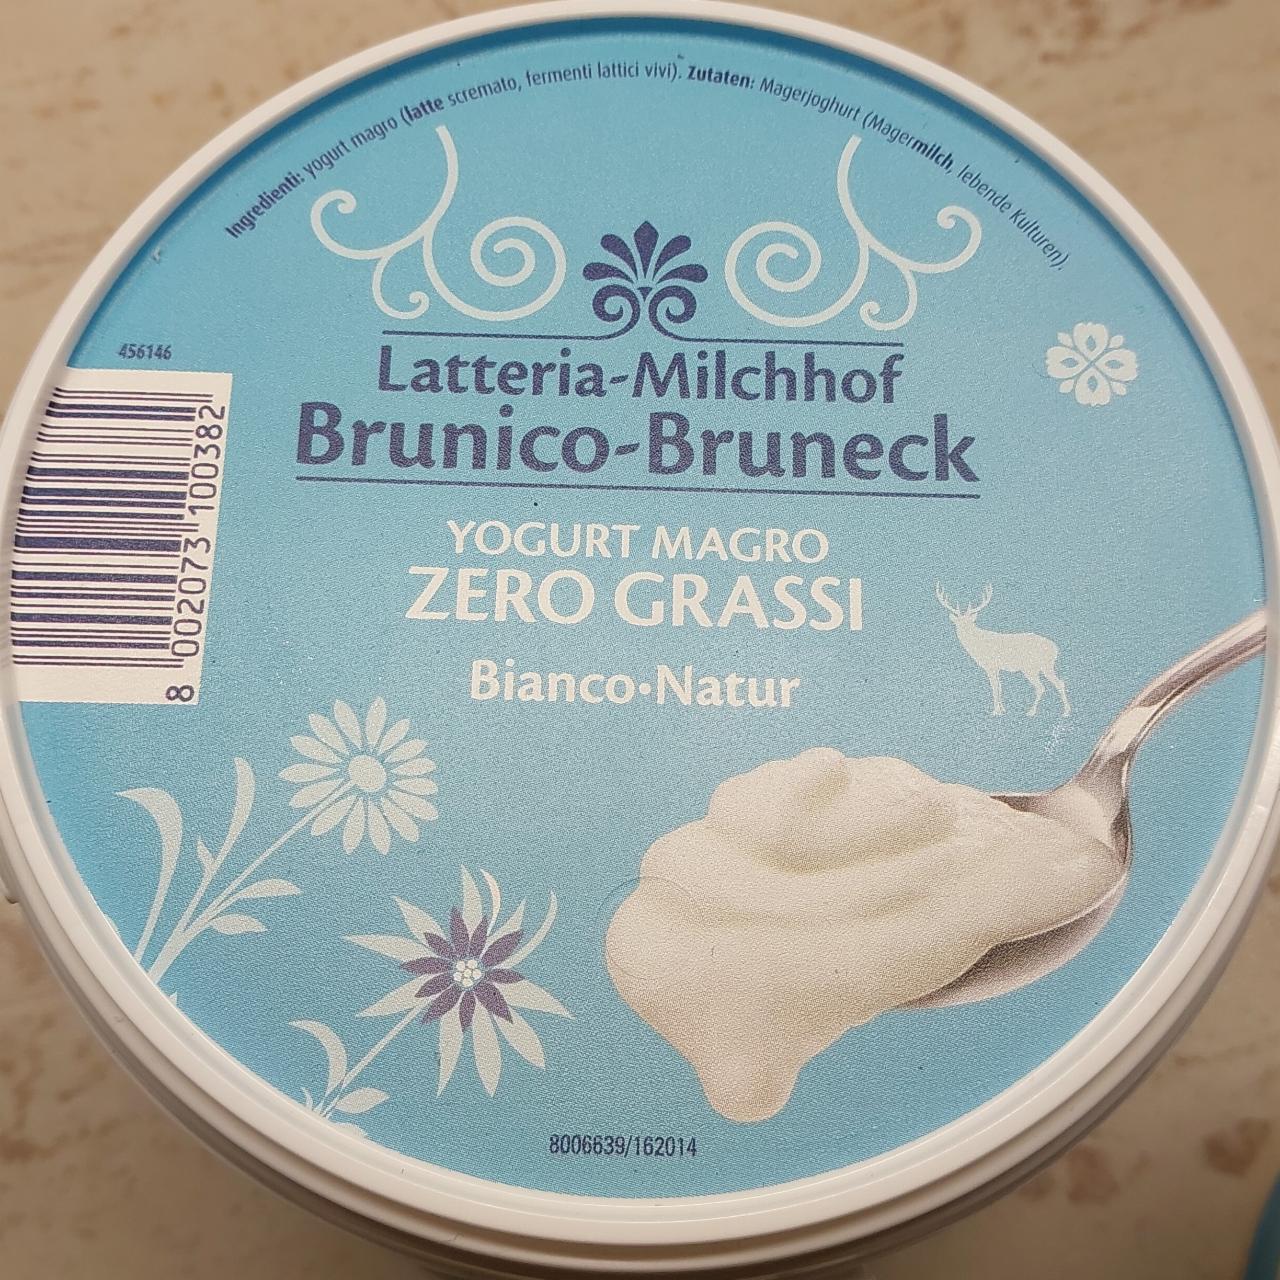 Fotografie - Yogurt magro zero grassi Brunico-Bruneck Latteria Milchhof